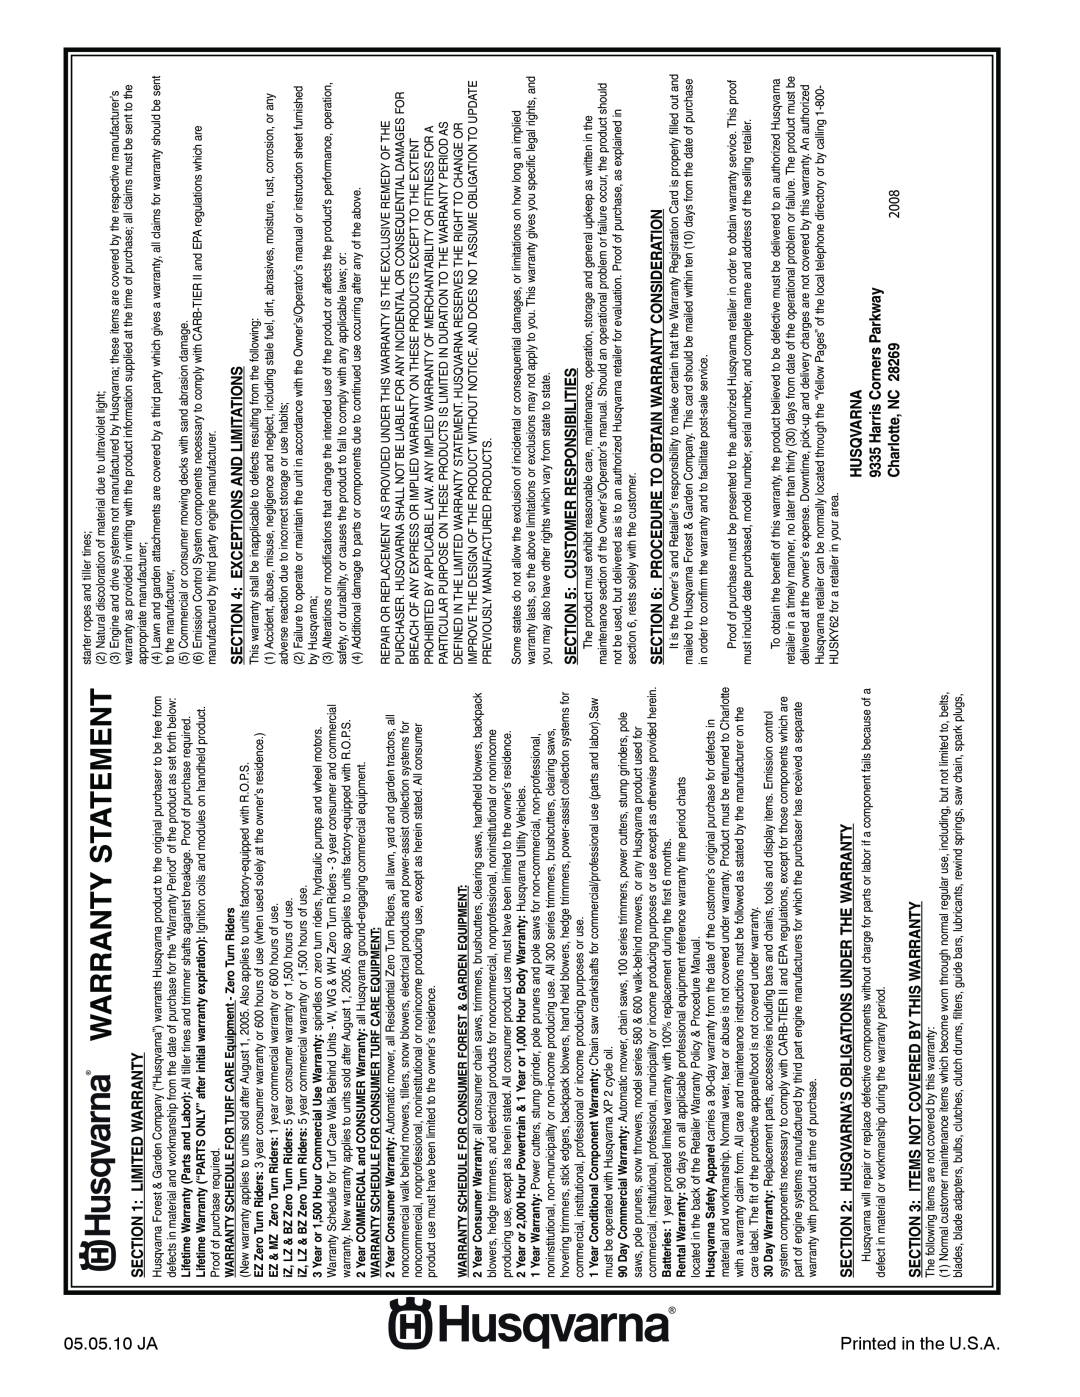 Husqvarna 96045002202 Warranty Statement, 2008, Charlotte, NC, Warranty Schedule For Consumer Turf Care Equipment 